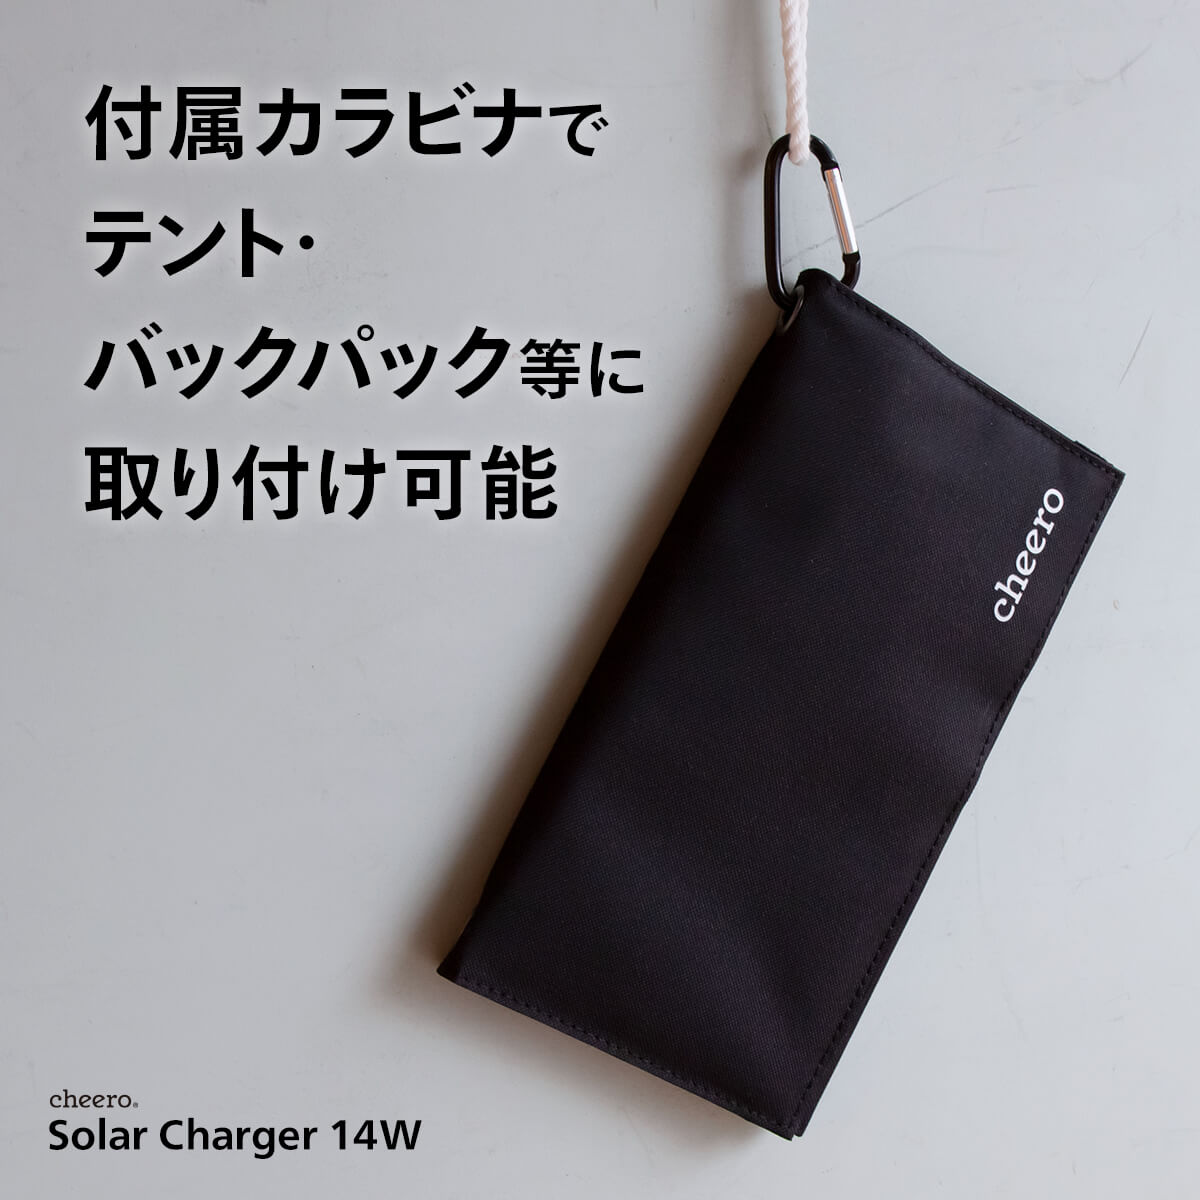 cheero Solar Charger 14W